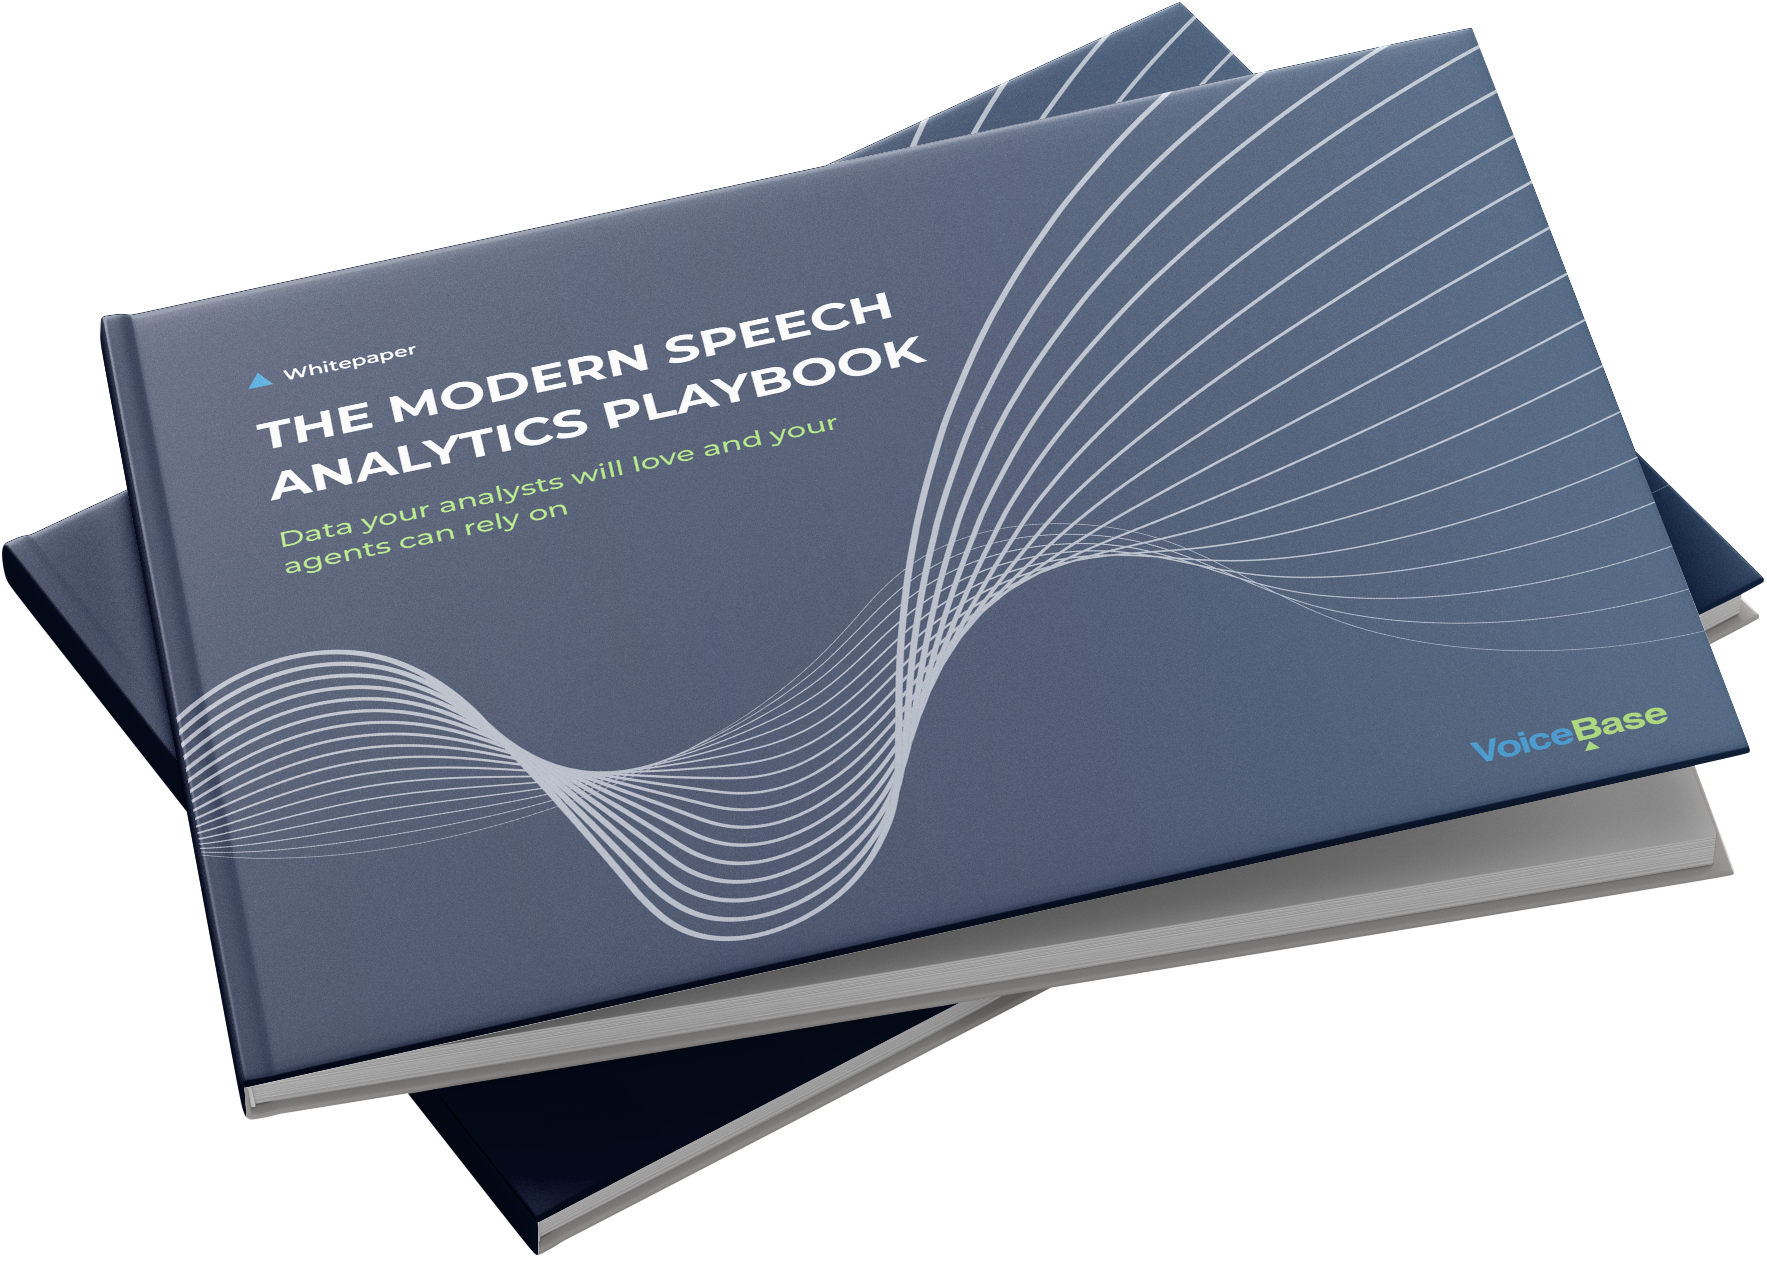 Speech Analytics Playbook PDF